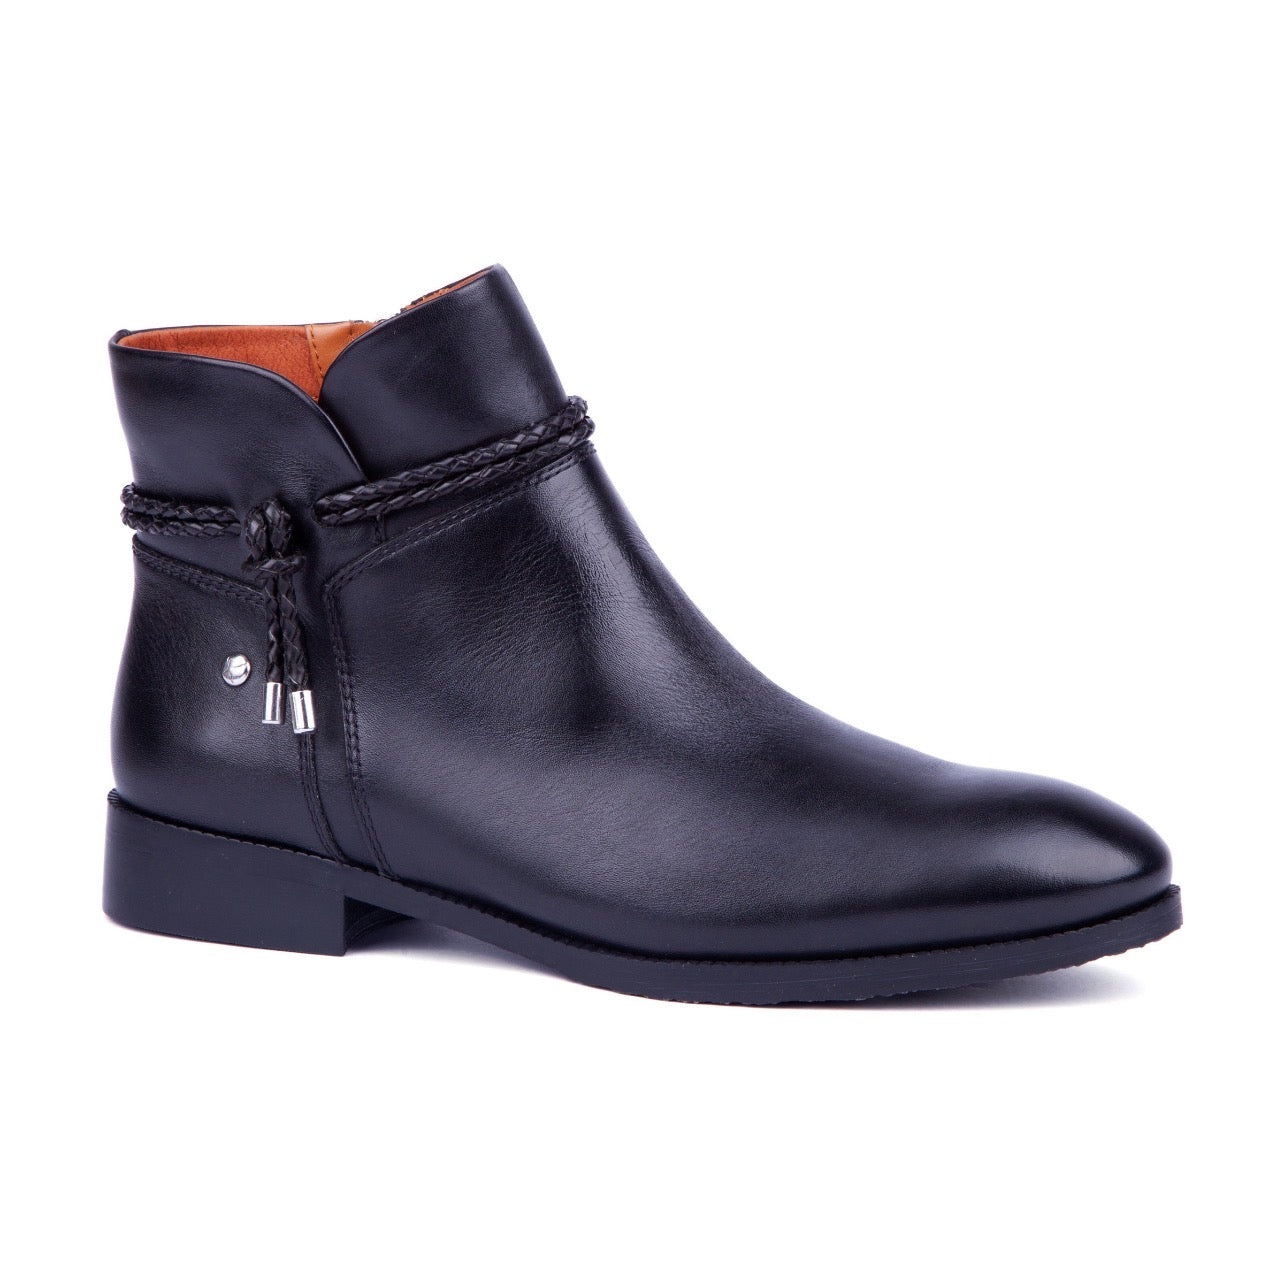 ROYAL-PIKOLINOS – Athena Footwear Limited